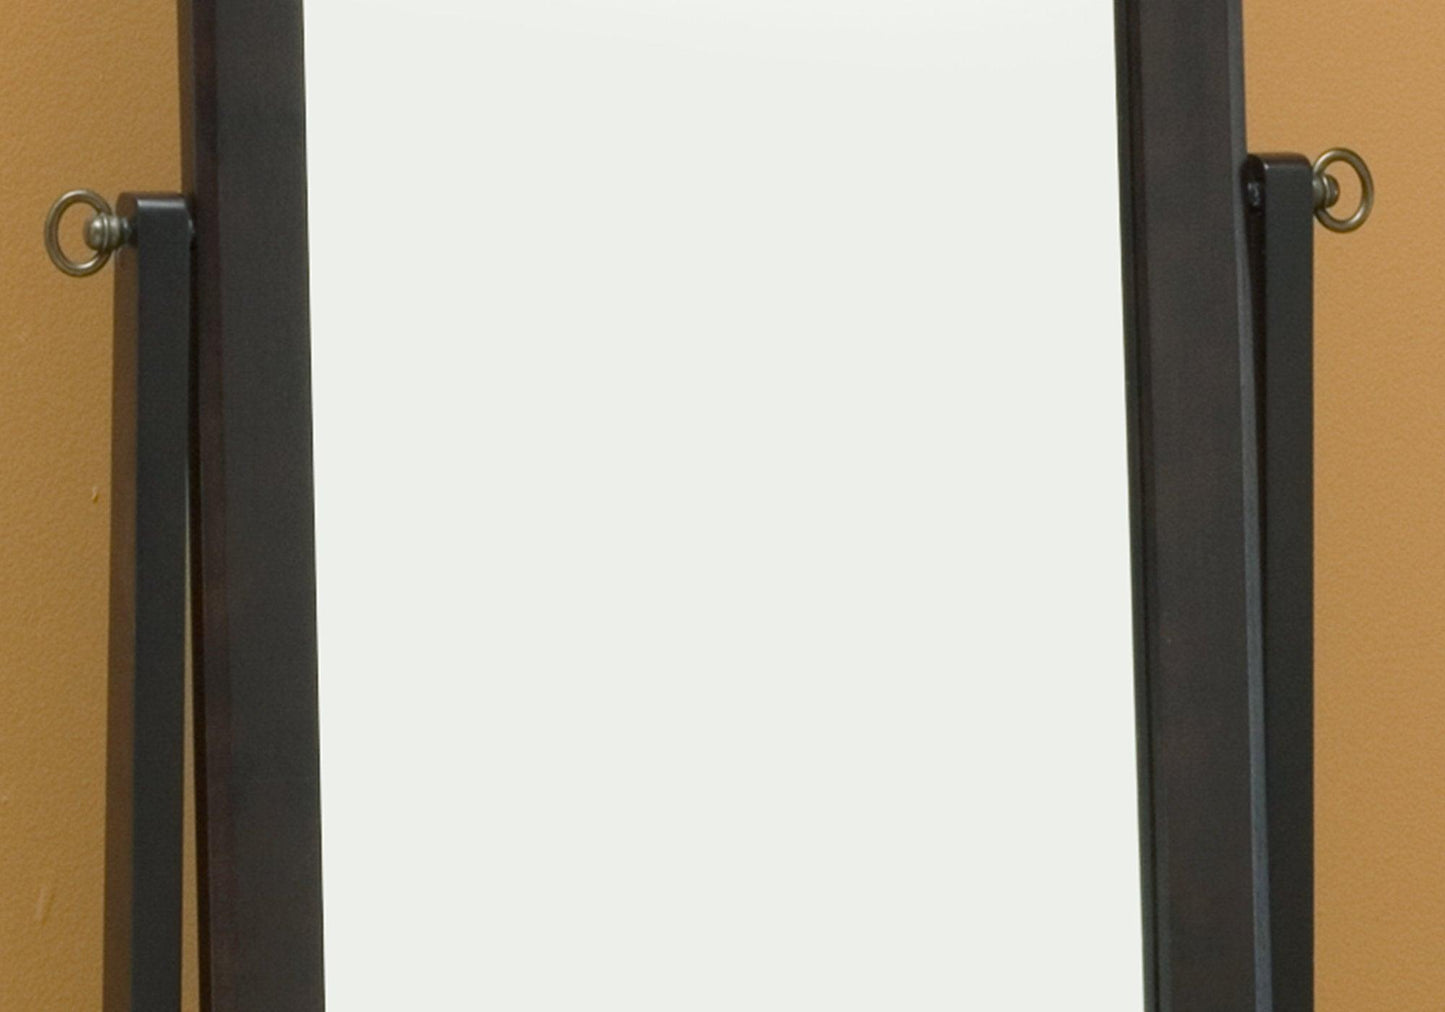 60" Brown Framed Cheval Standing Mirror - FurniFindUSA